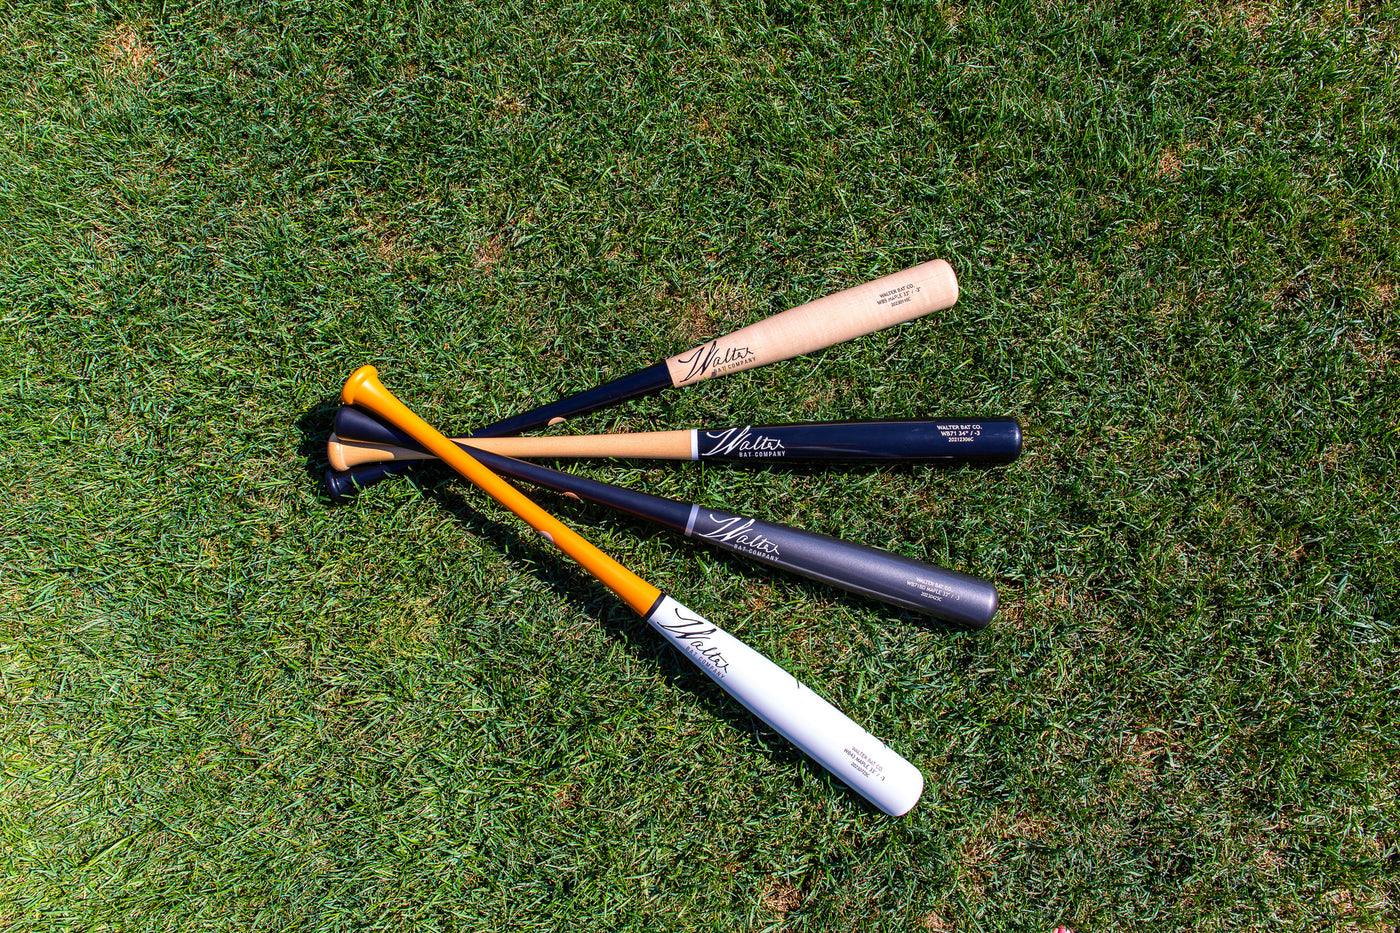 Custom Baseball & Softball Bats 